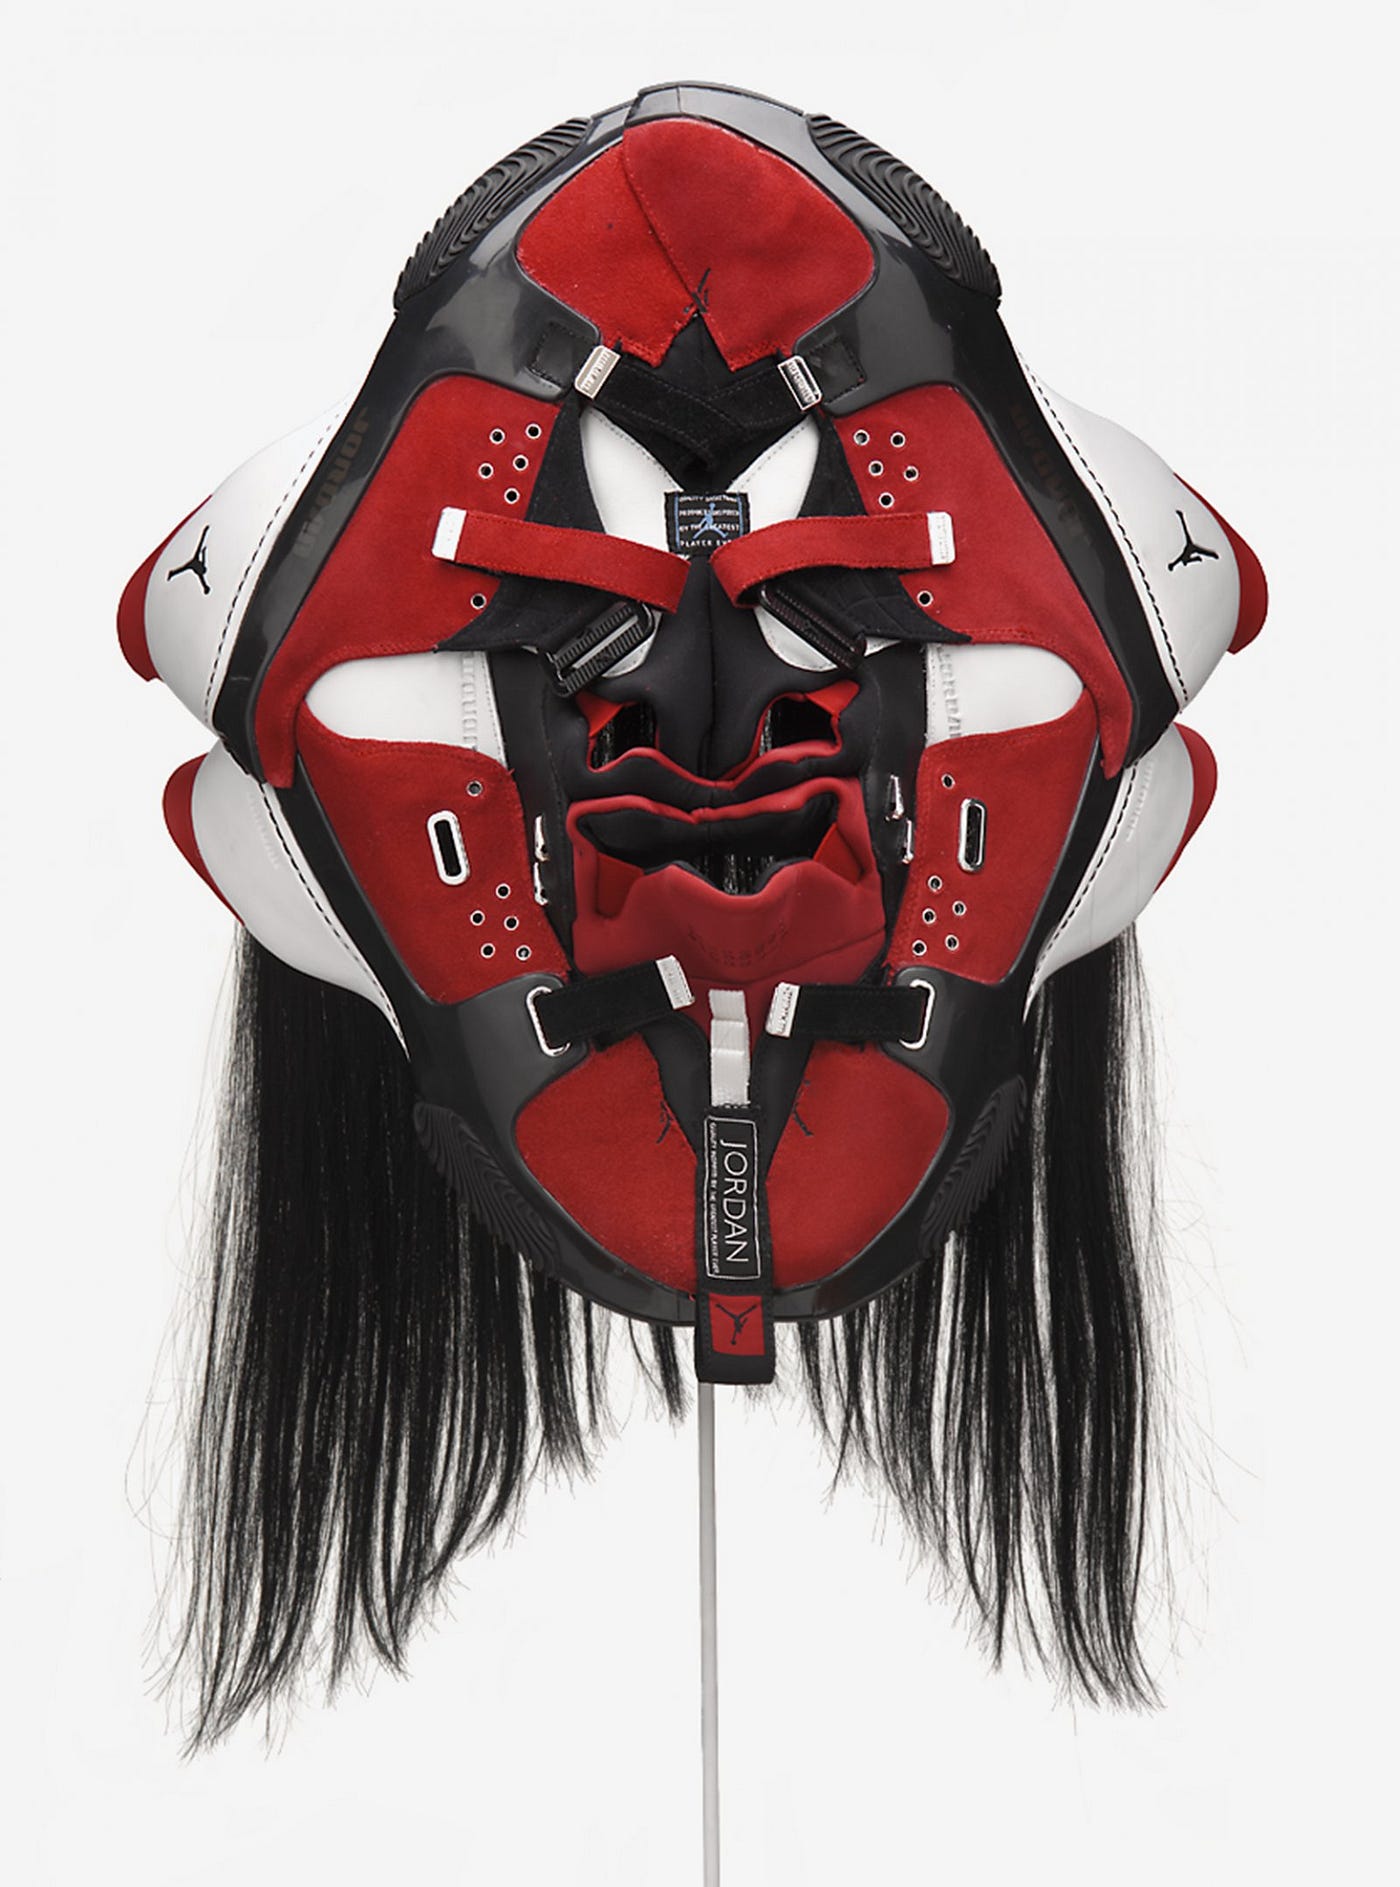 Nike Air Jordan Sneakers Turned Into Sculptures | by ARTBLOC | ARTBLOC |  Medium